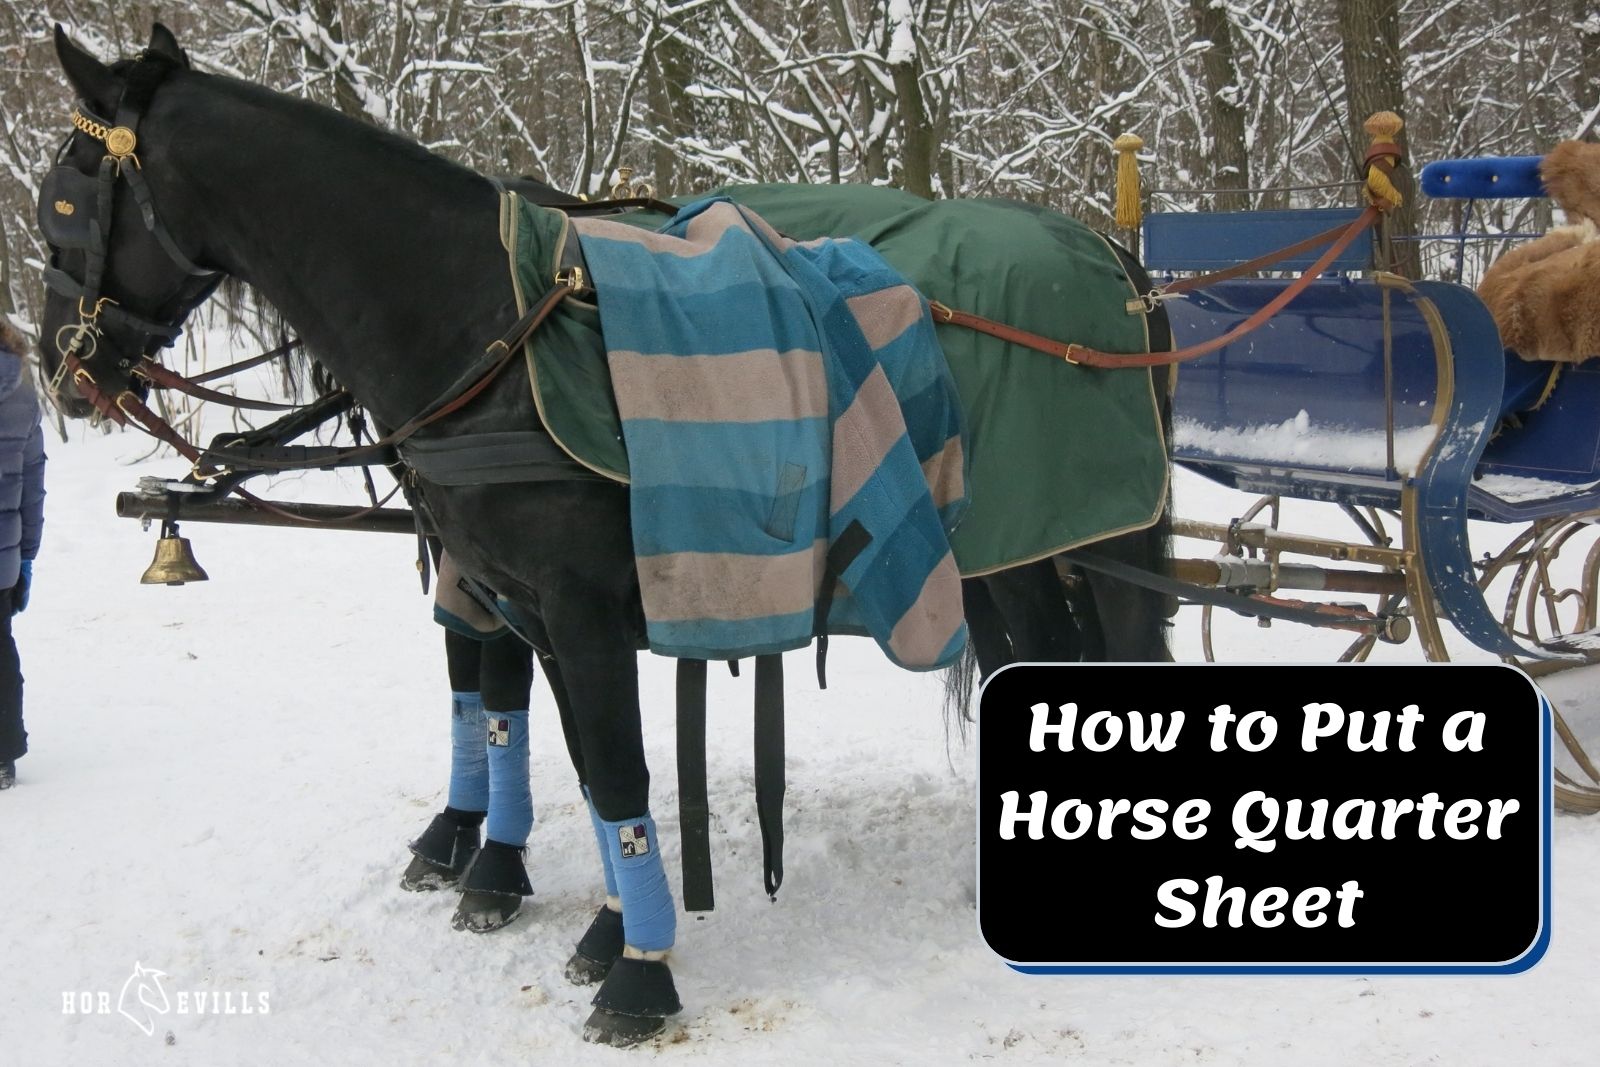 black horse beside "How Do You Put a Quarter Sheet On a Horse" text